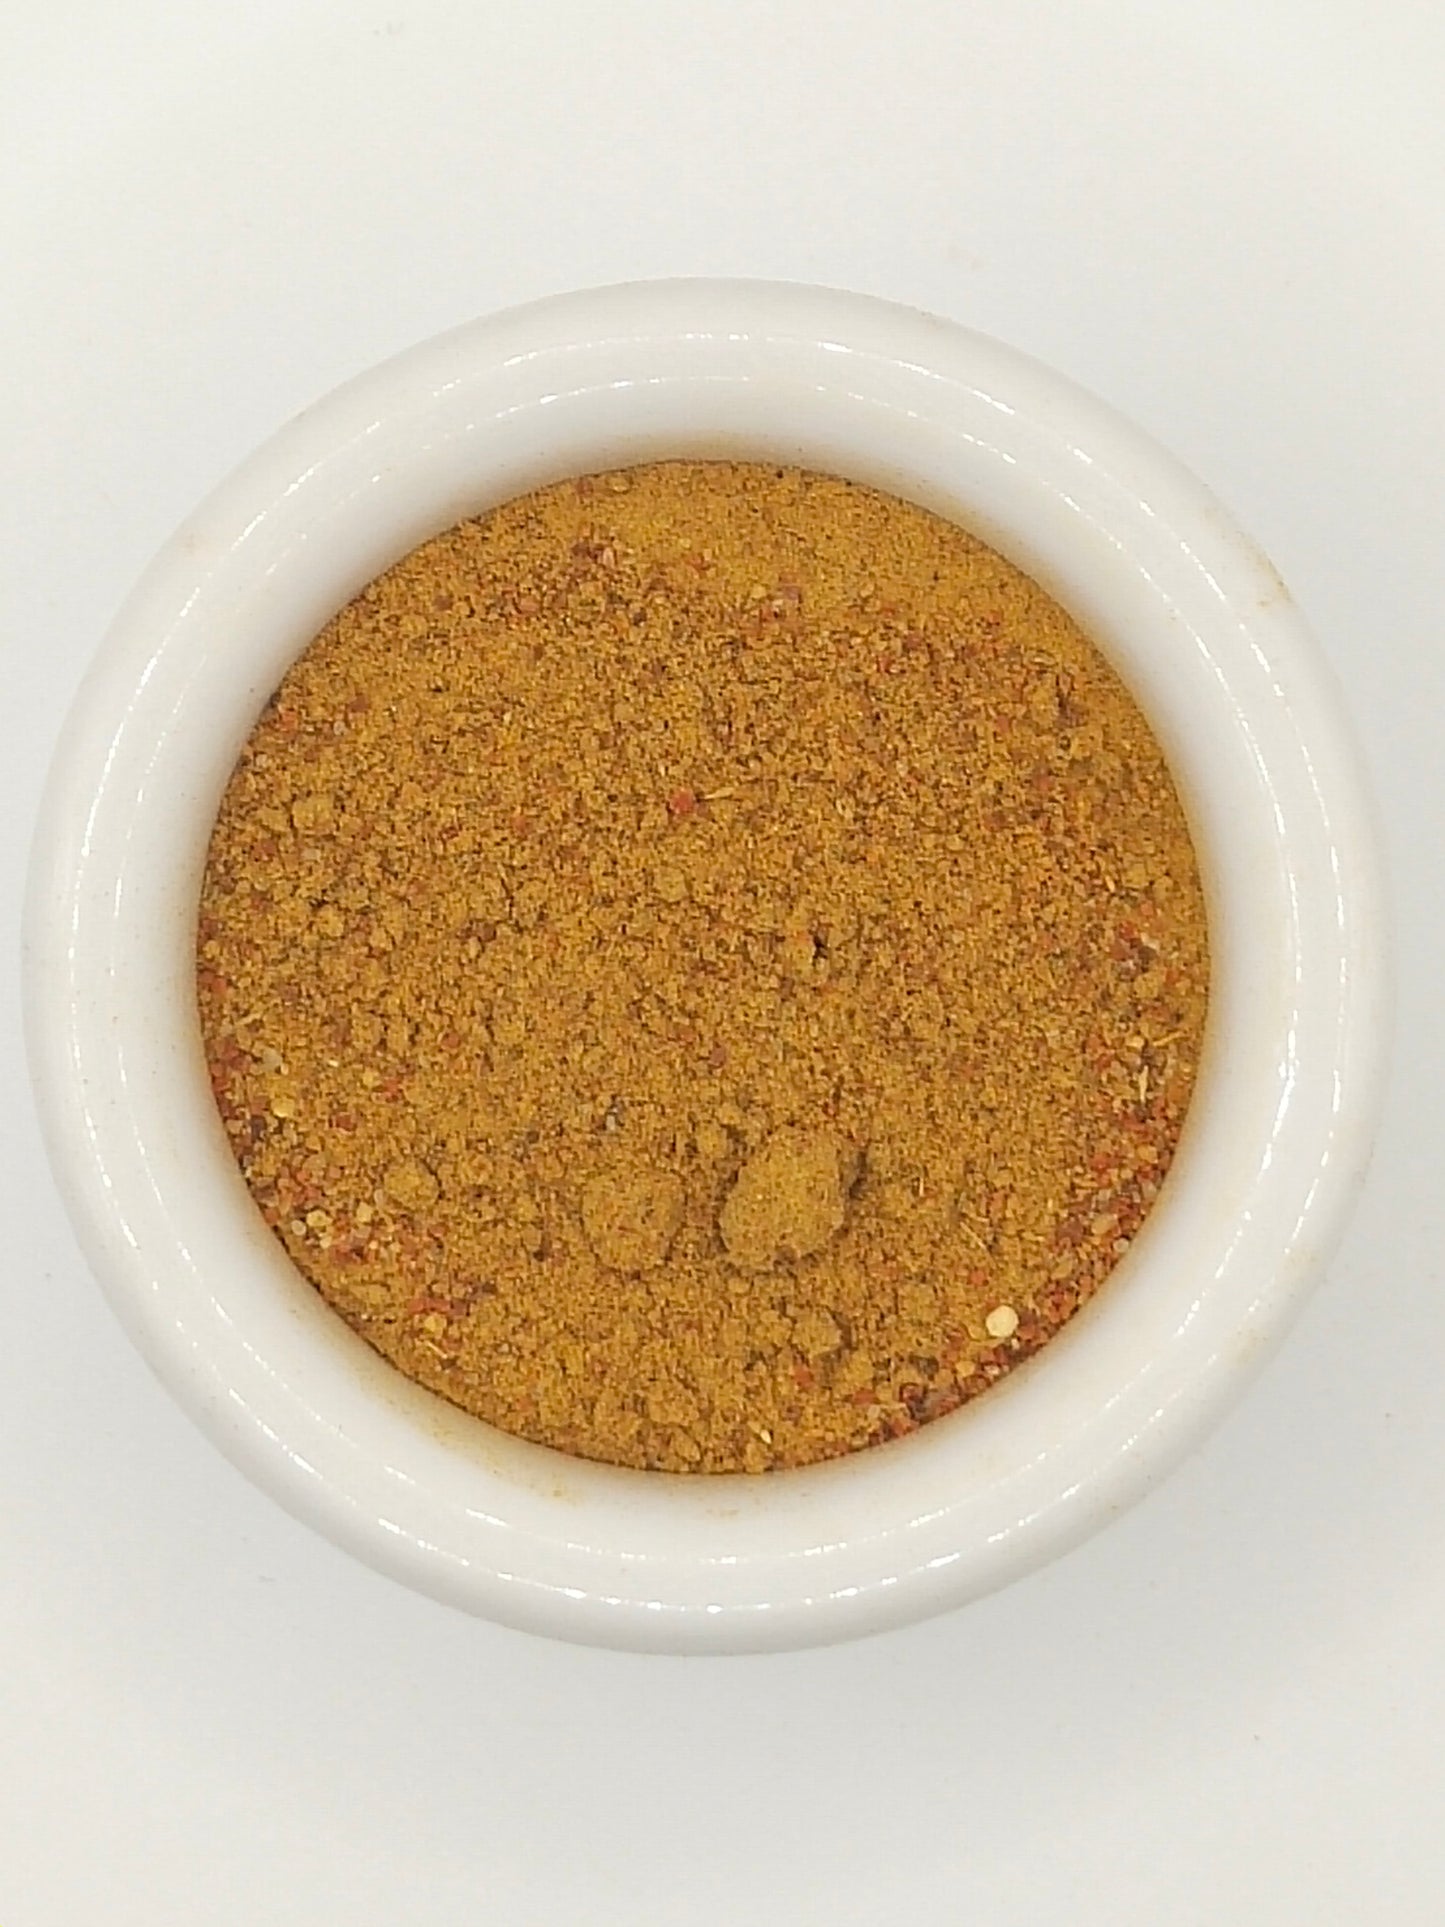 Curry Powder Vindaloo